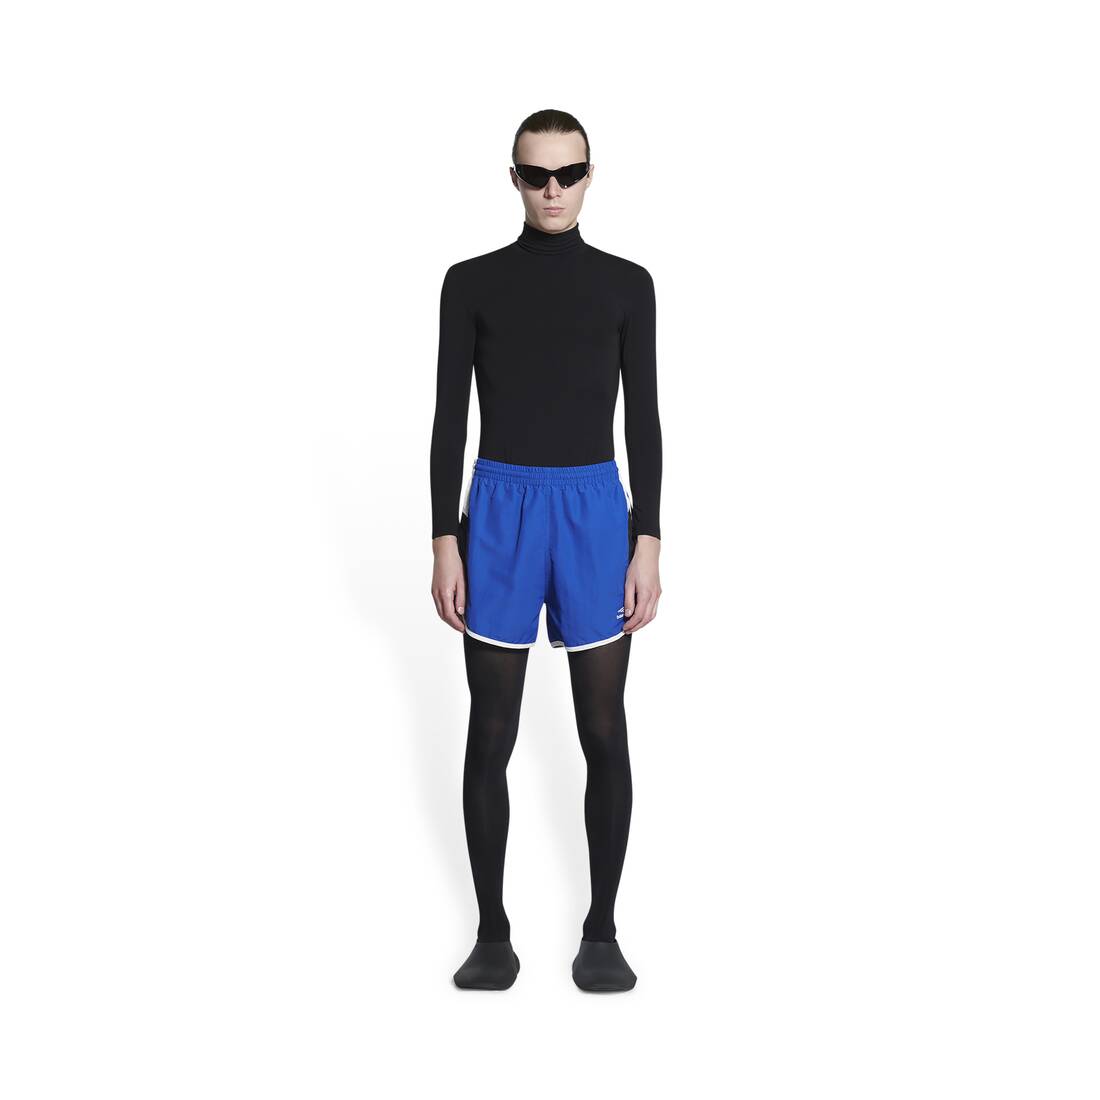 3b sports icon tracksuit running shorts